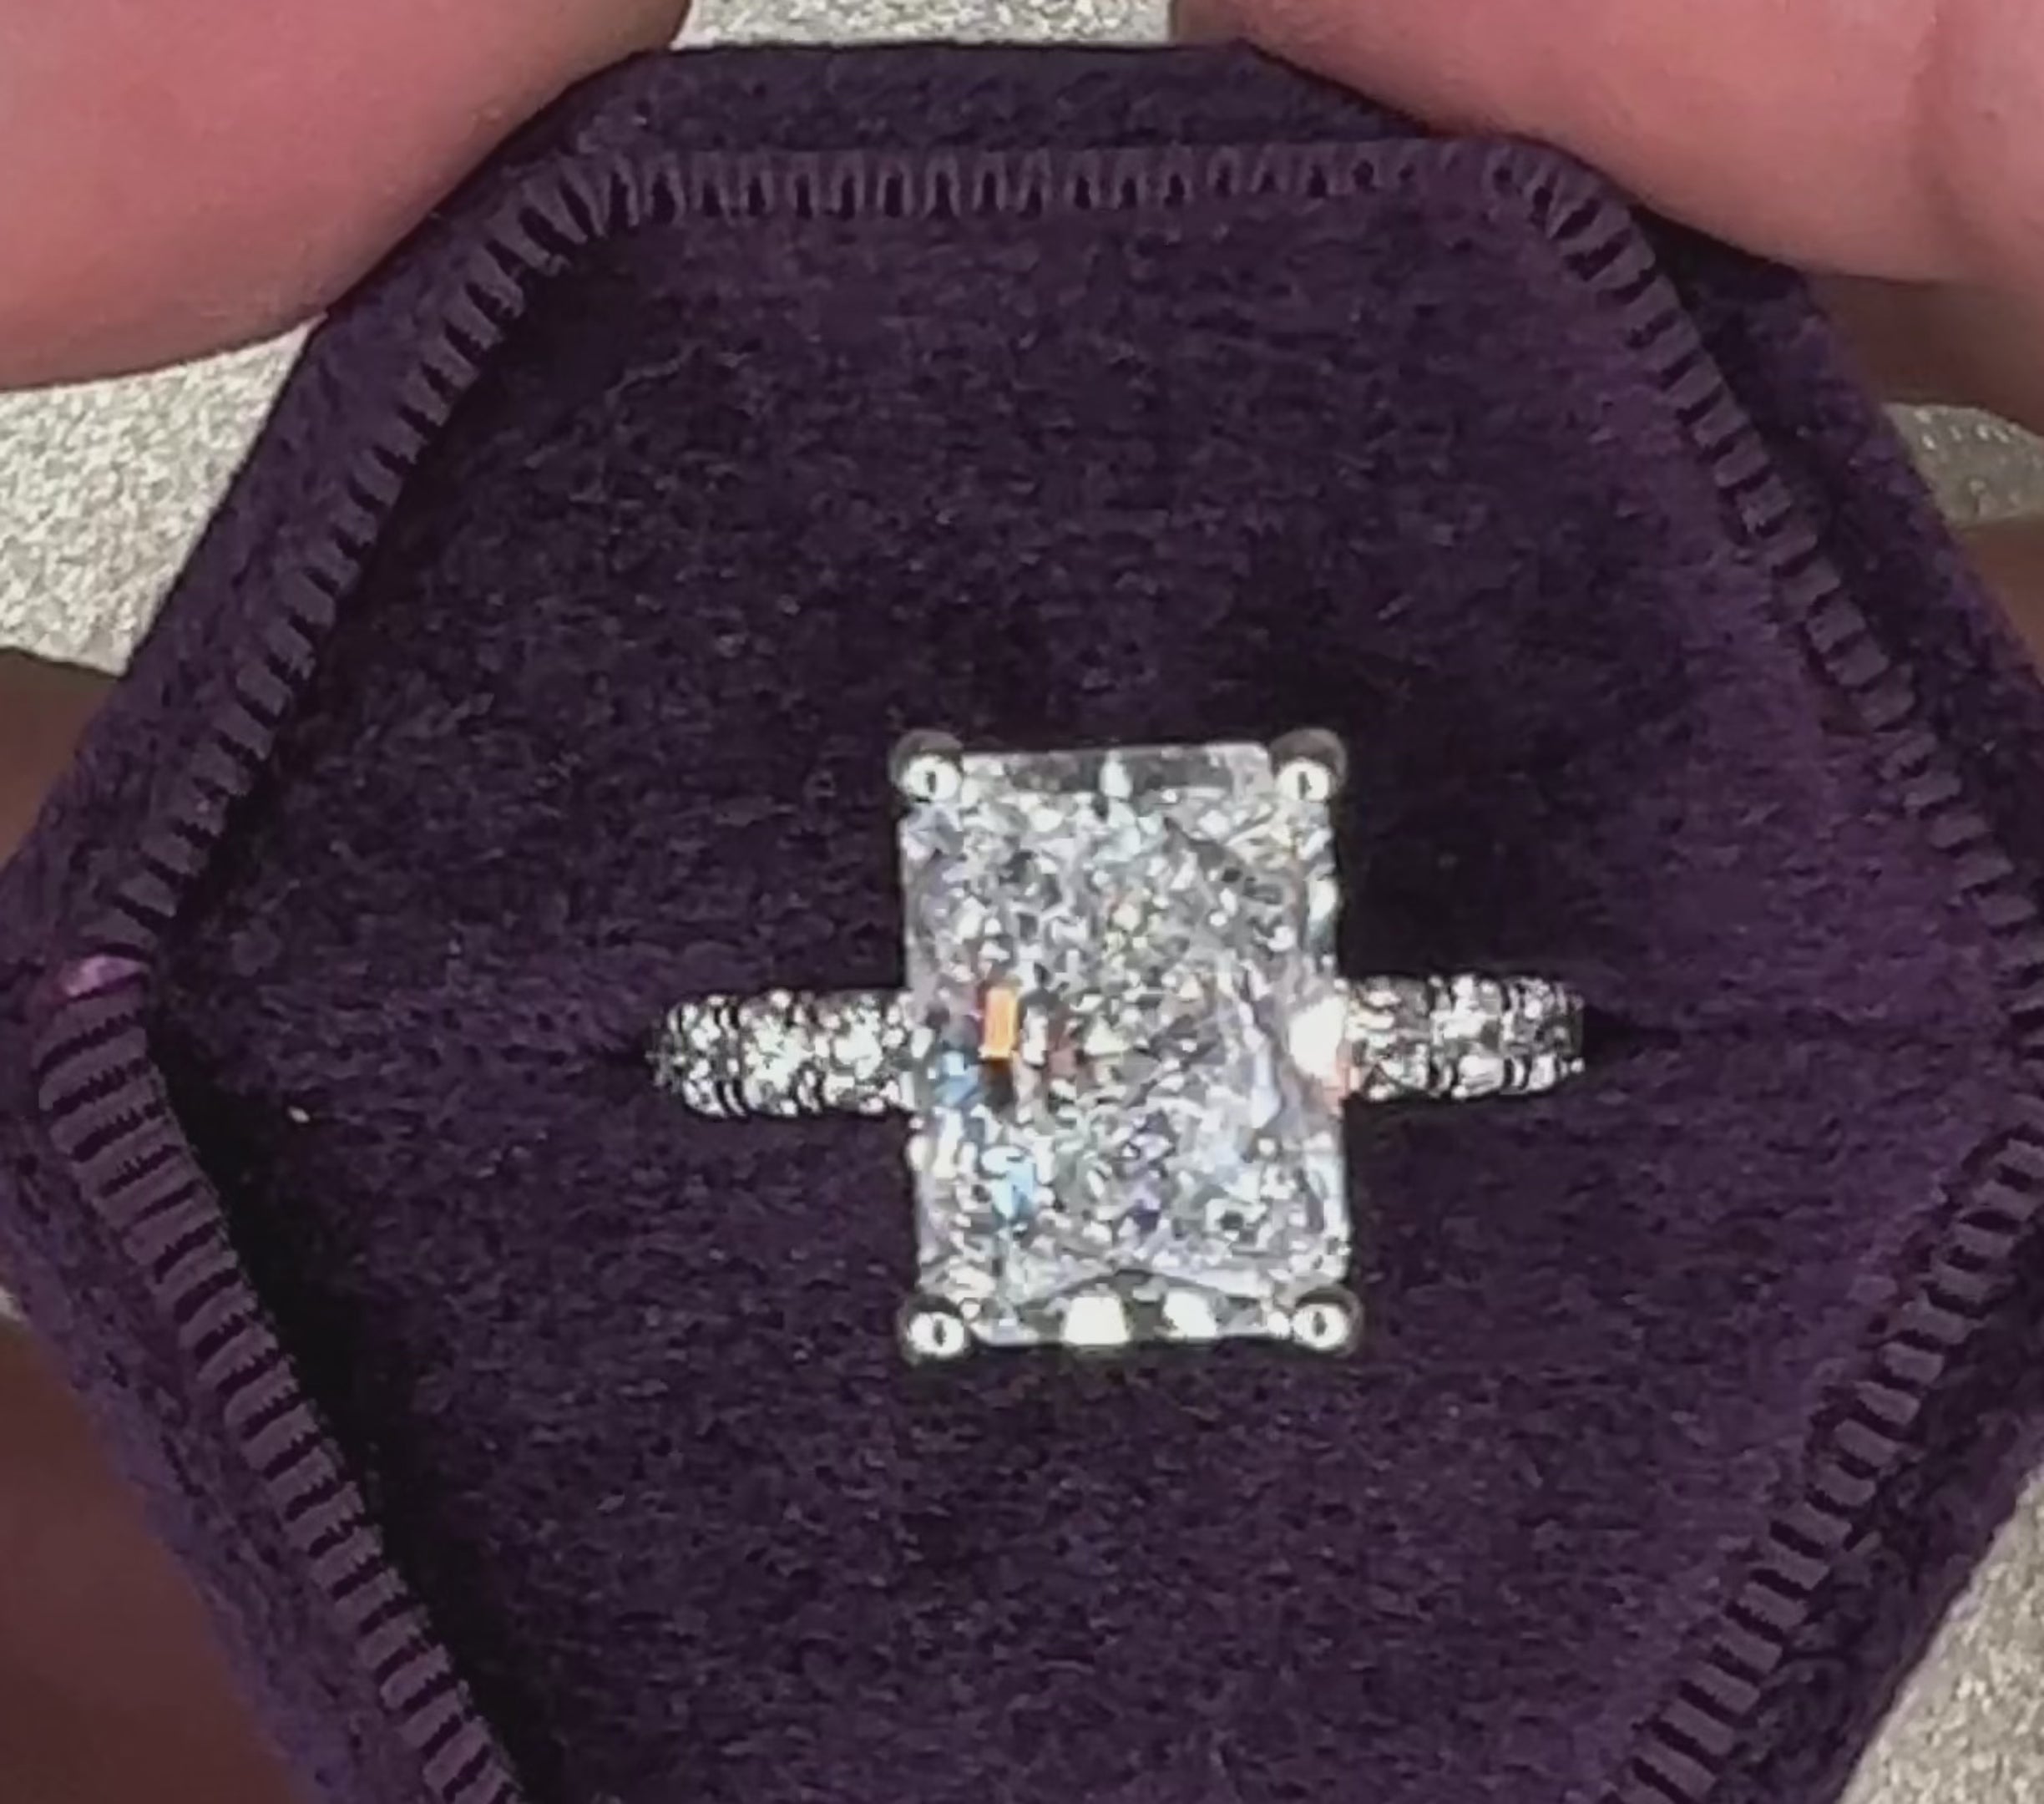 Radiant Diamond Rings By Adiamor Are Regal - Adiamor Blog